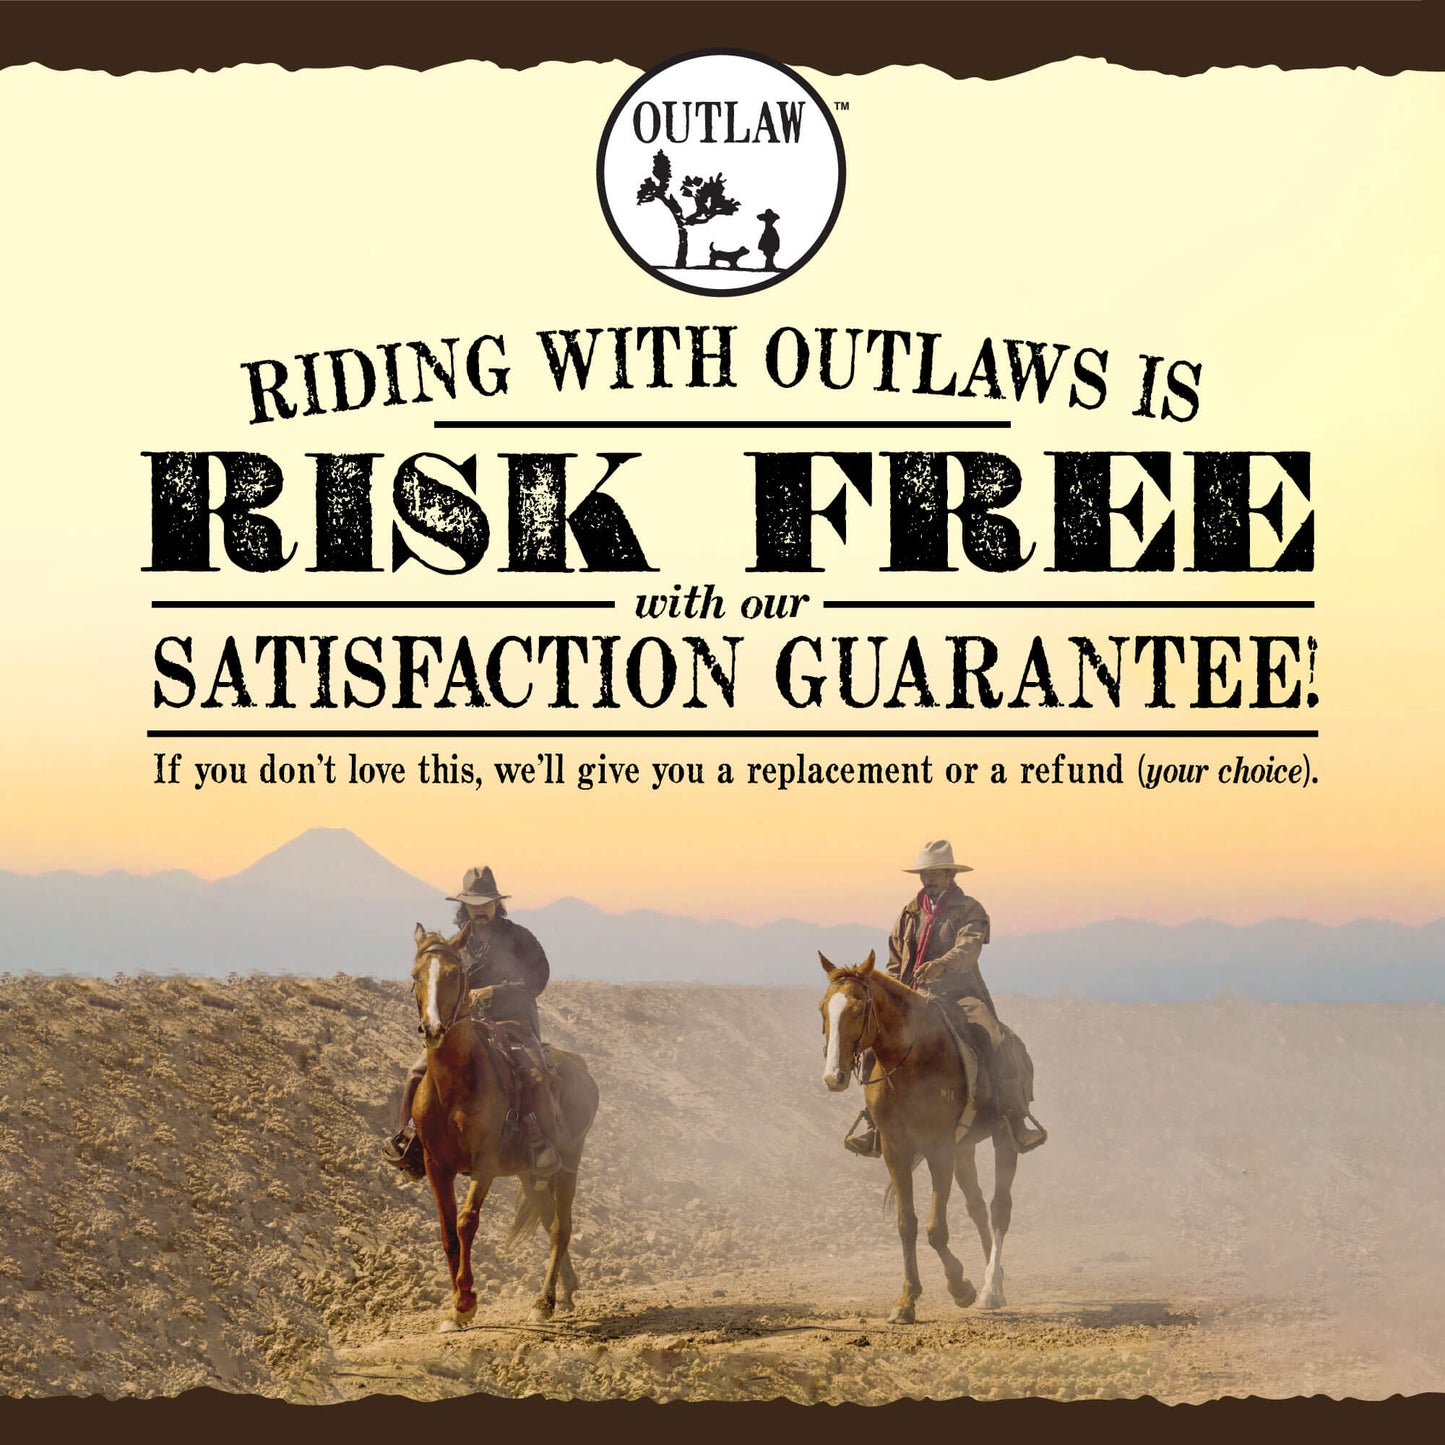 Outlaw satisfaction guarantee